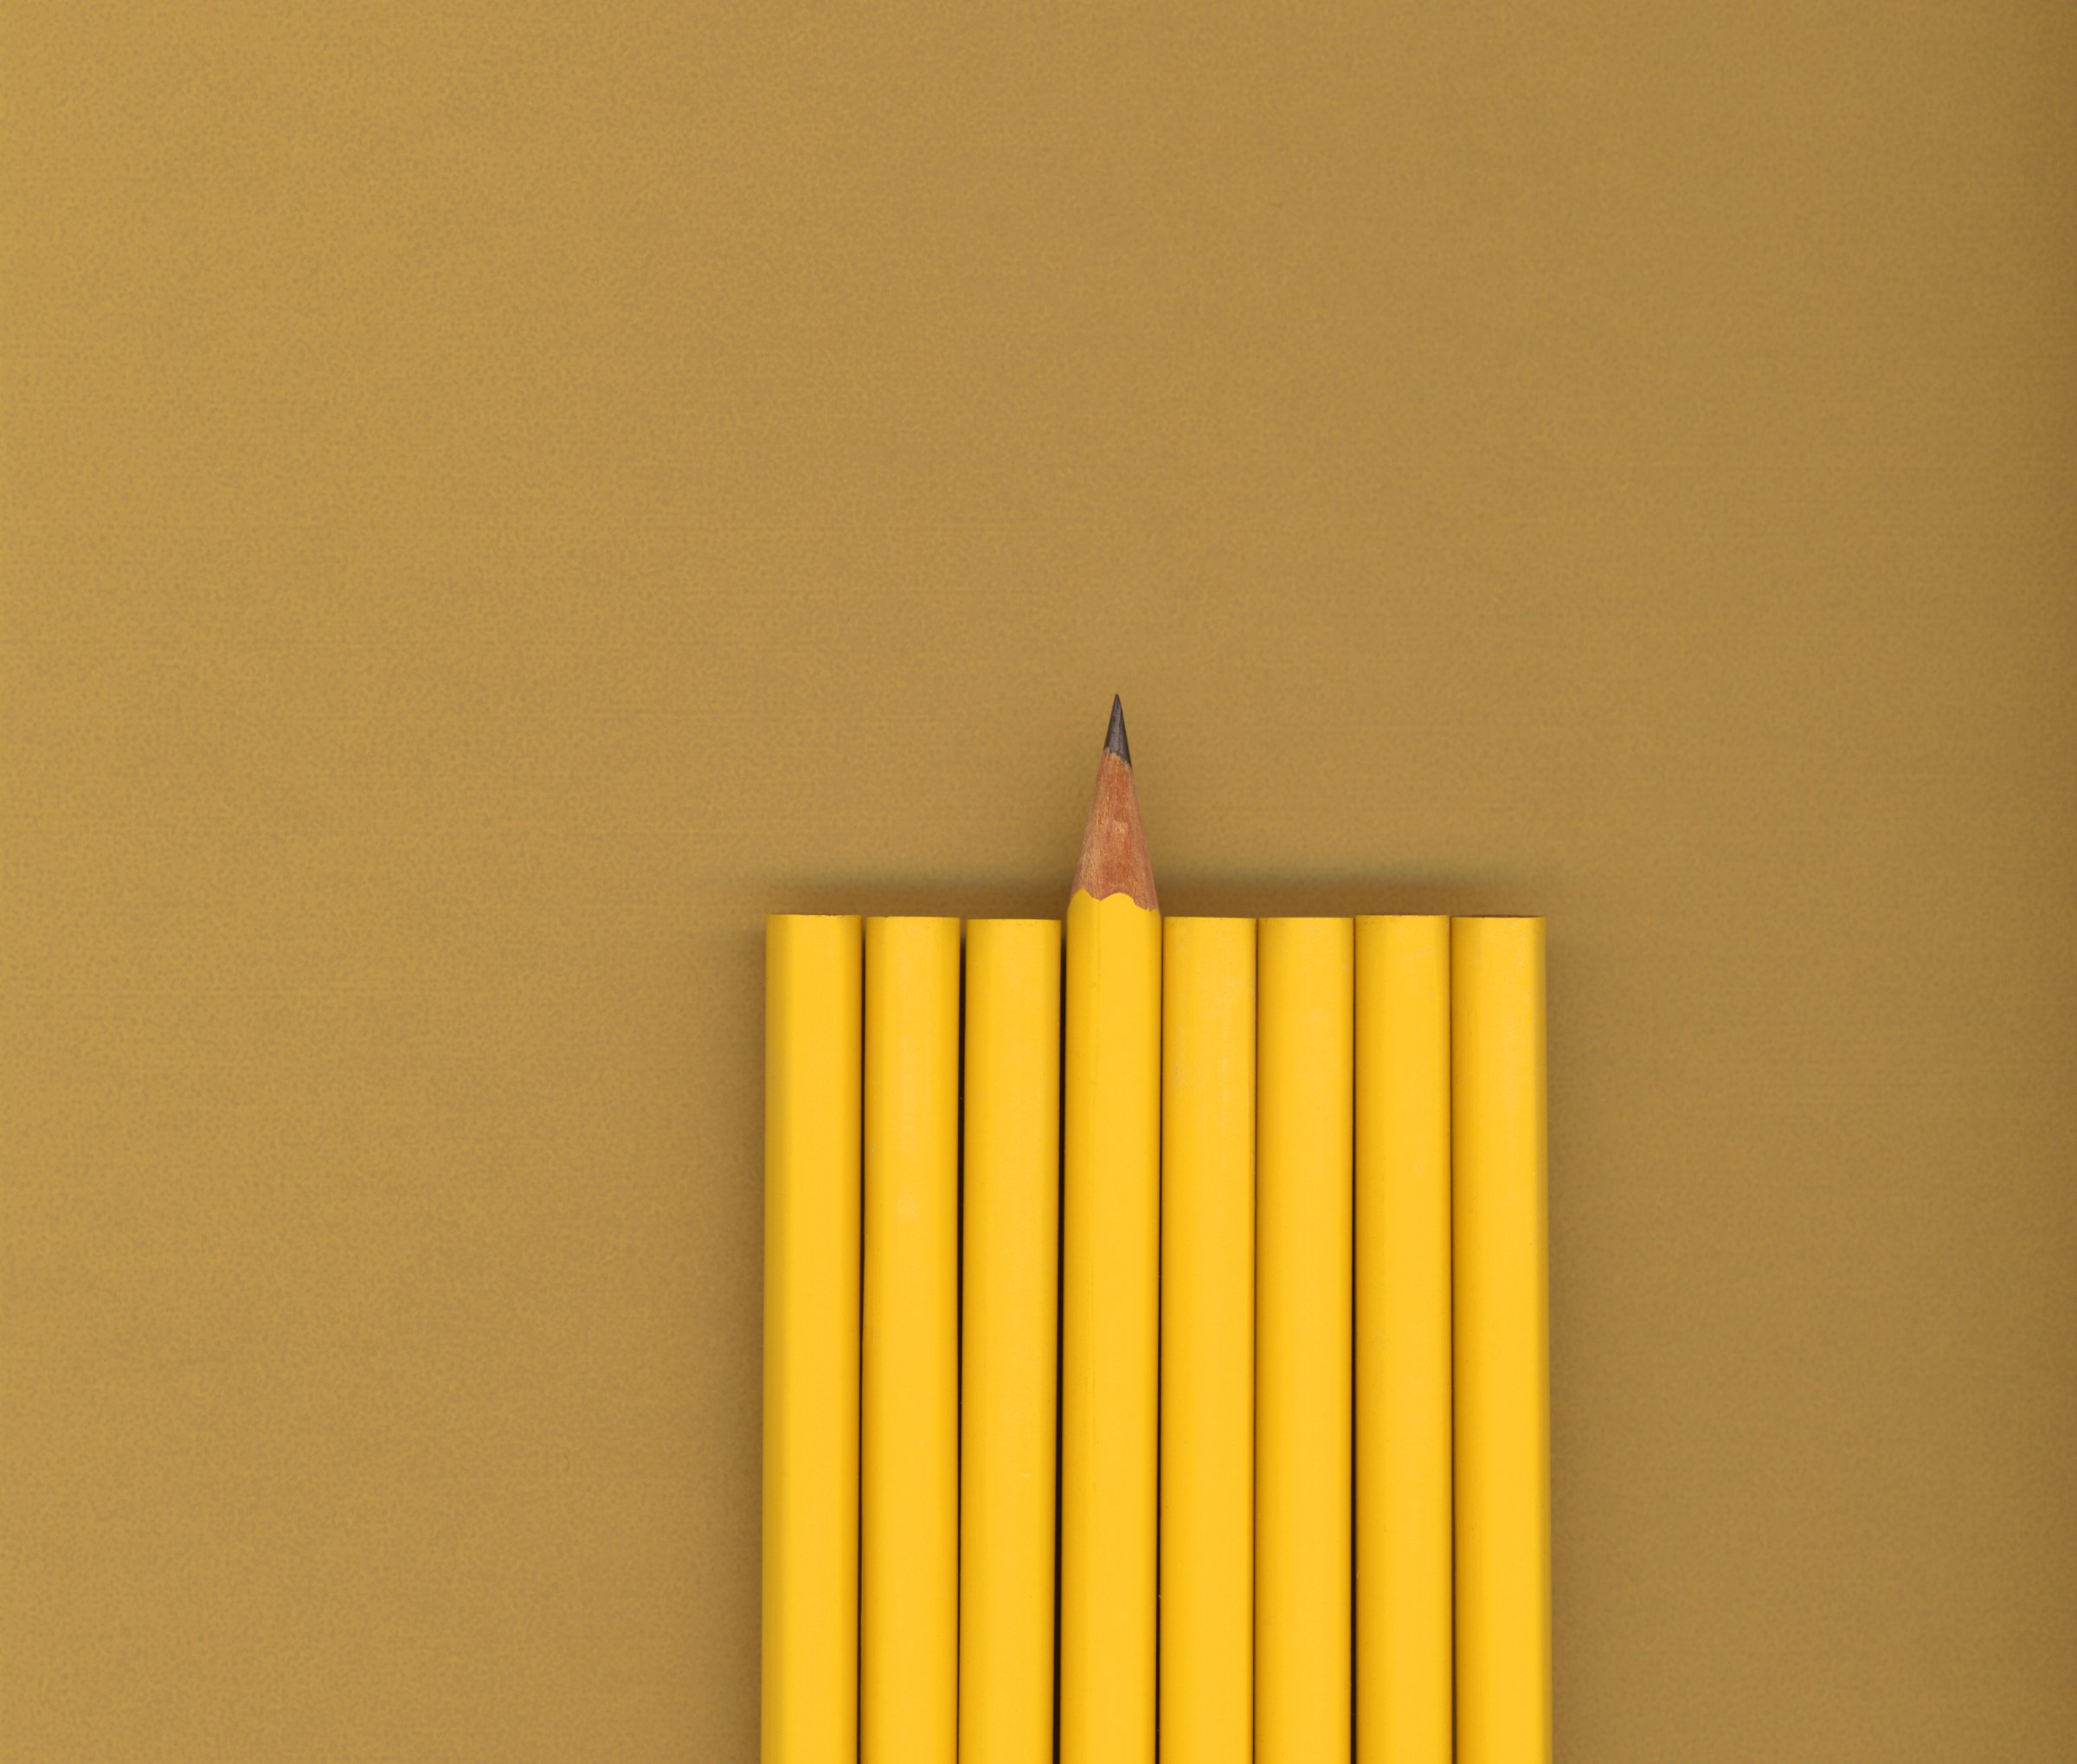 Sharpened pencil next to unsharpened pencils